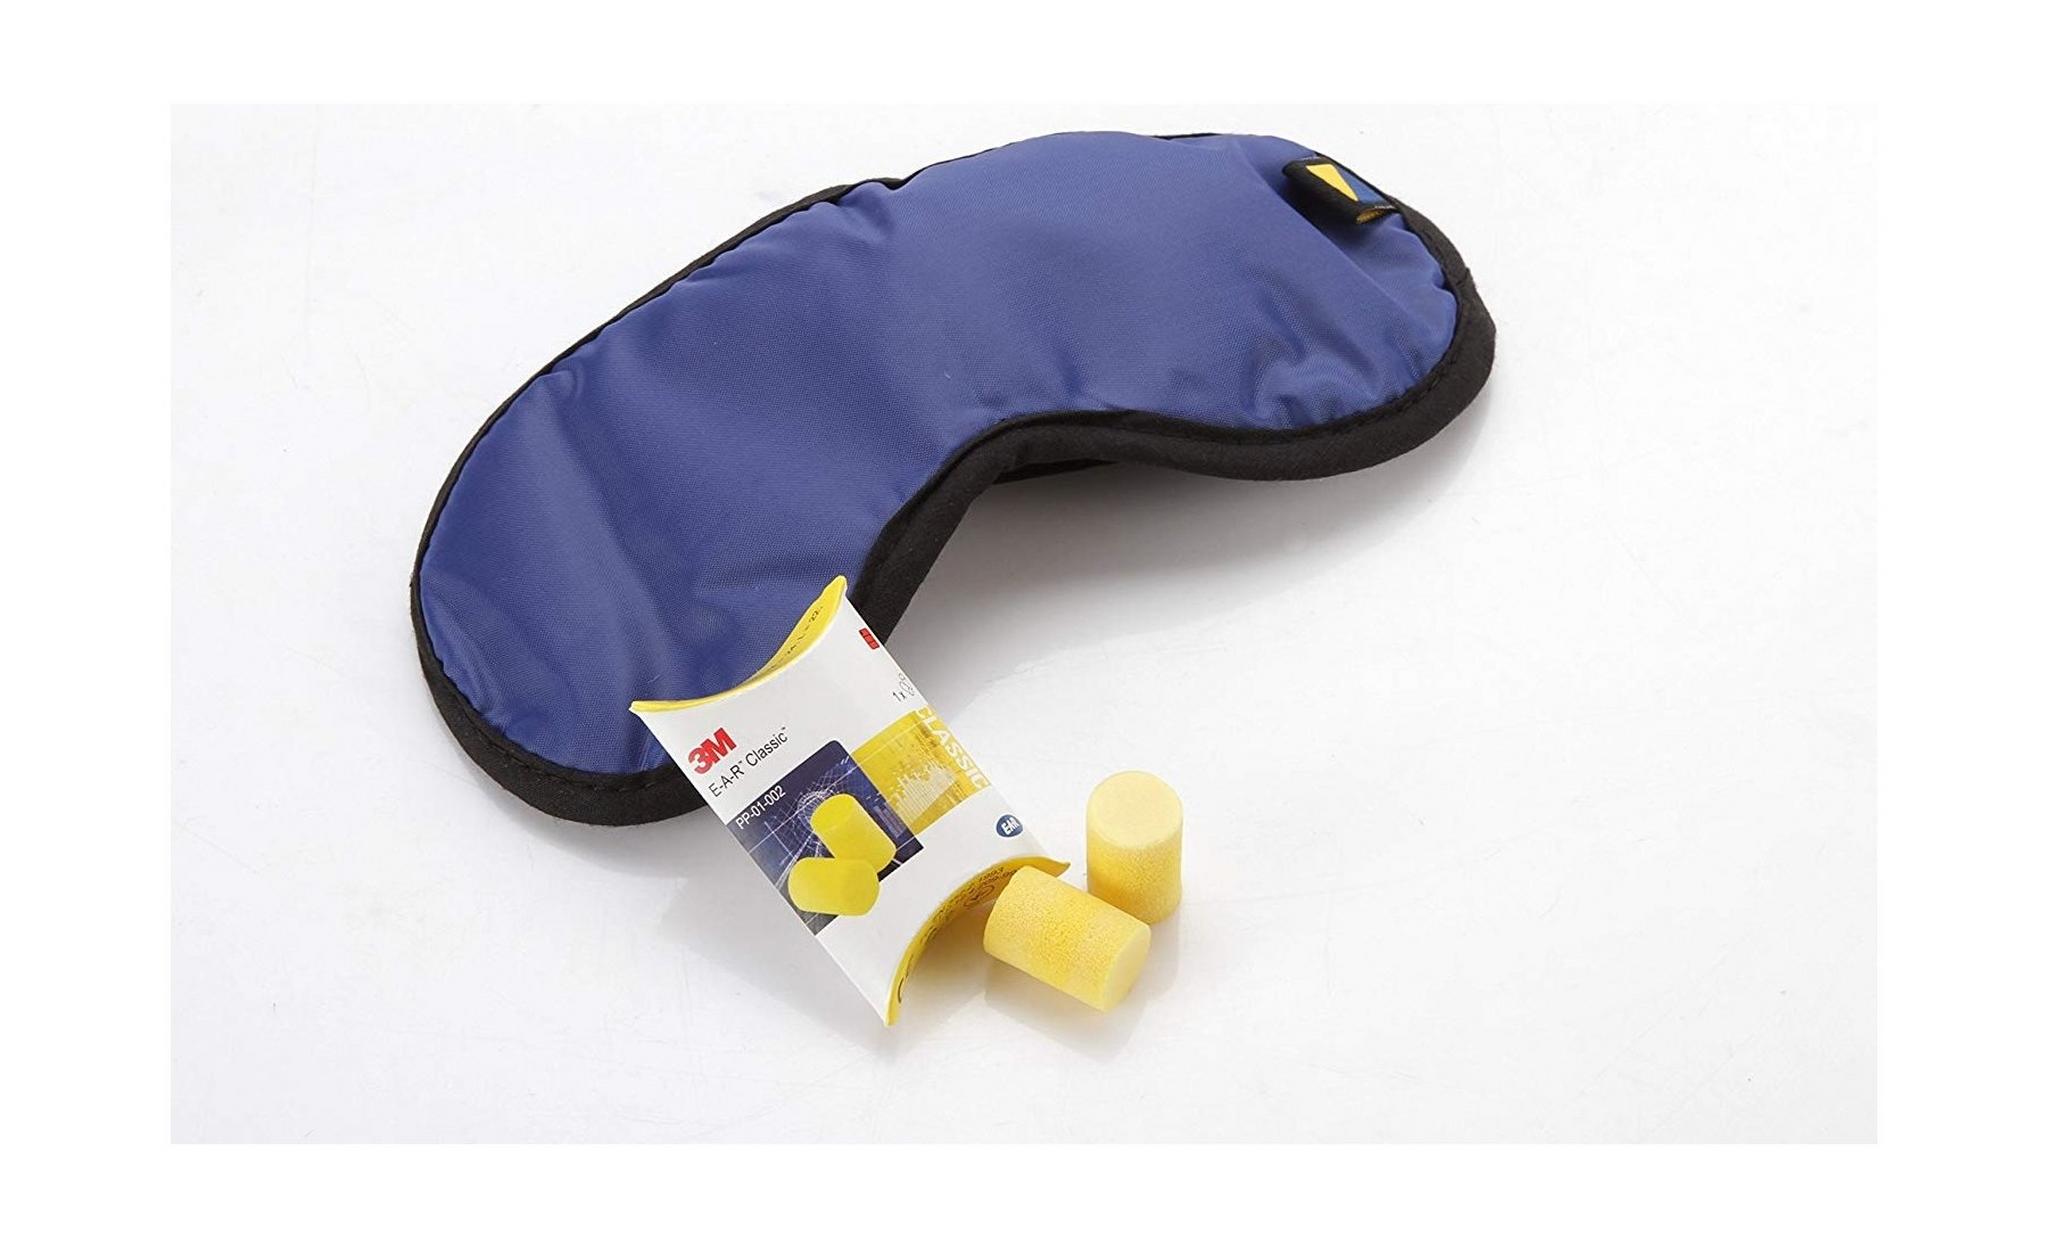 Travel Blue Earplug And Eye mask Comfort Set